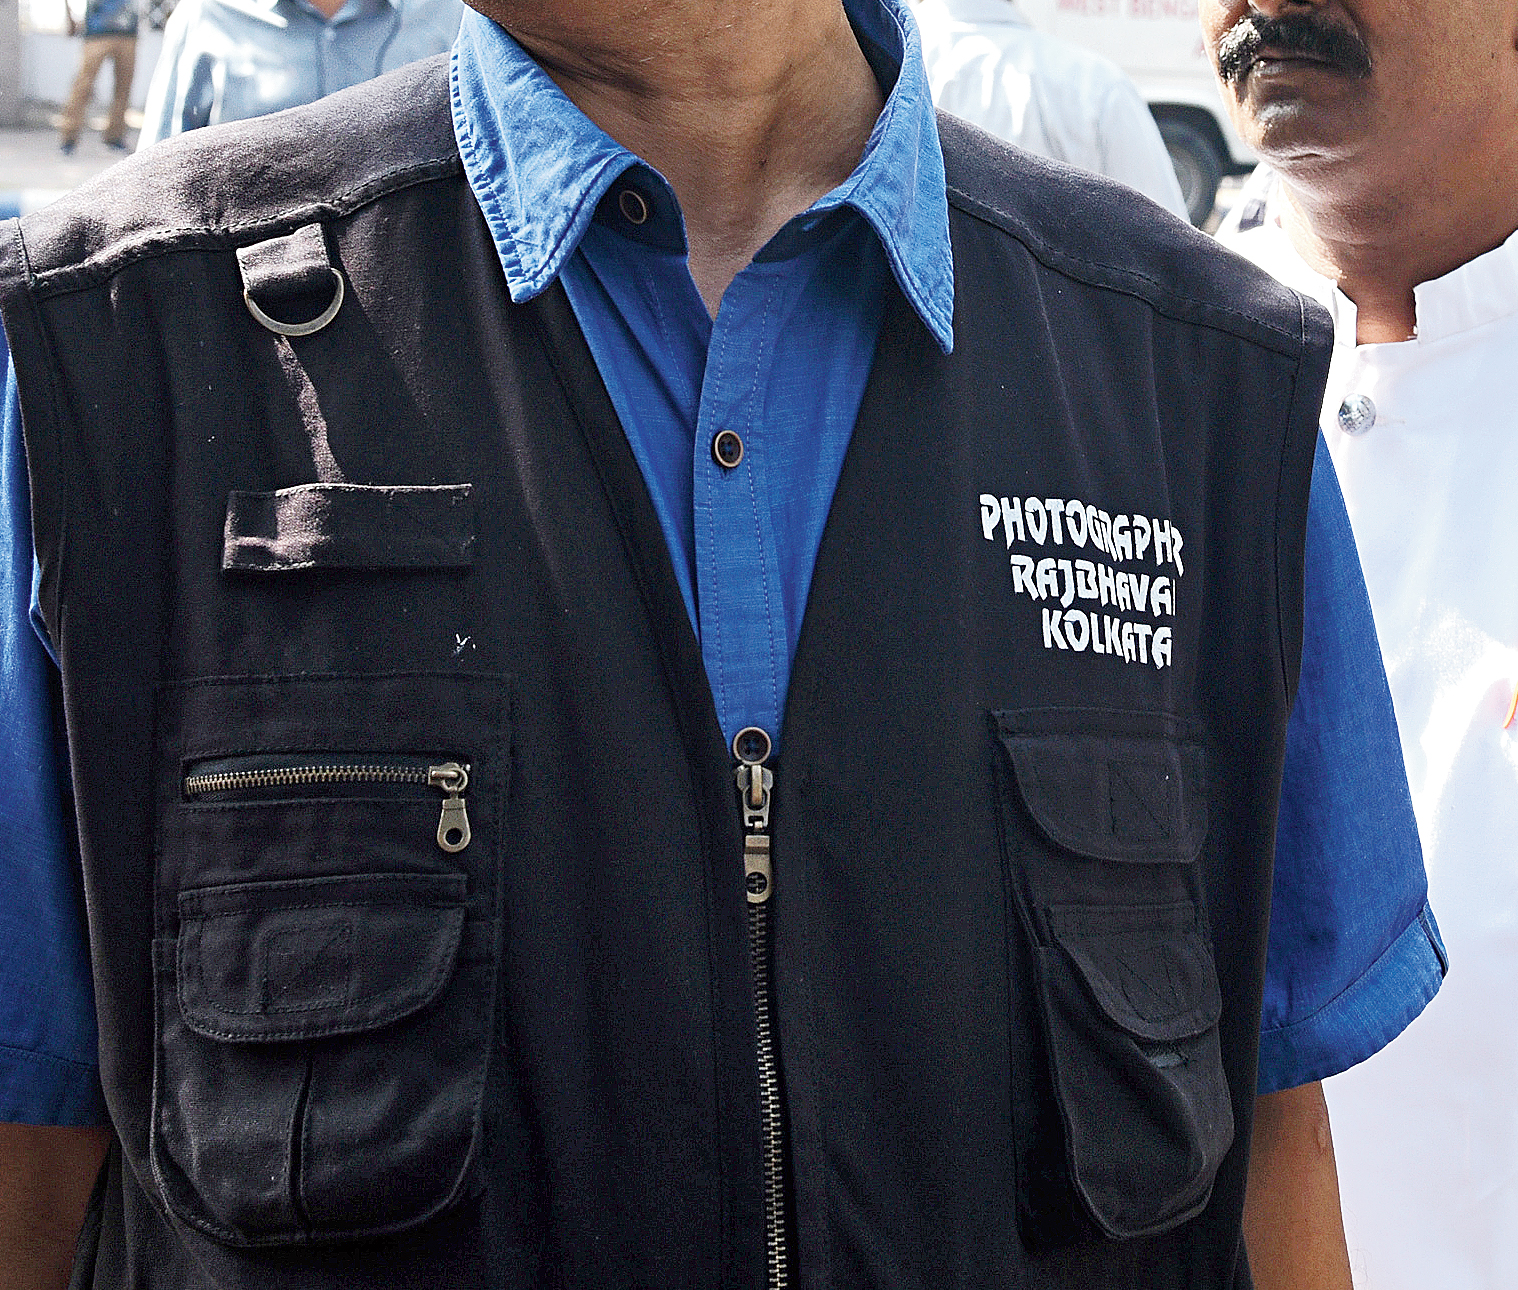 The photographer, whose  jacket says “Photographer Raj Bhavan Kolkata”, waits at the gate of the Assembly. 
